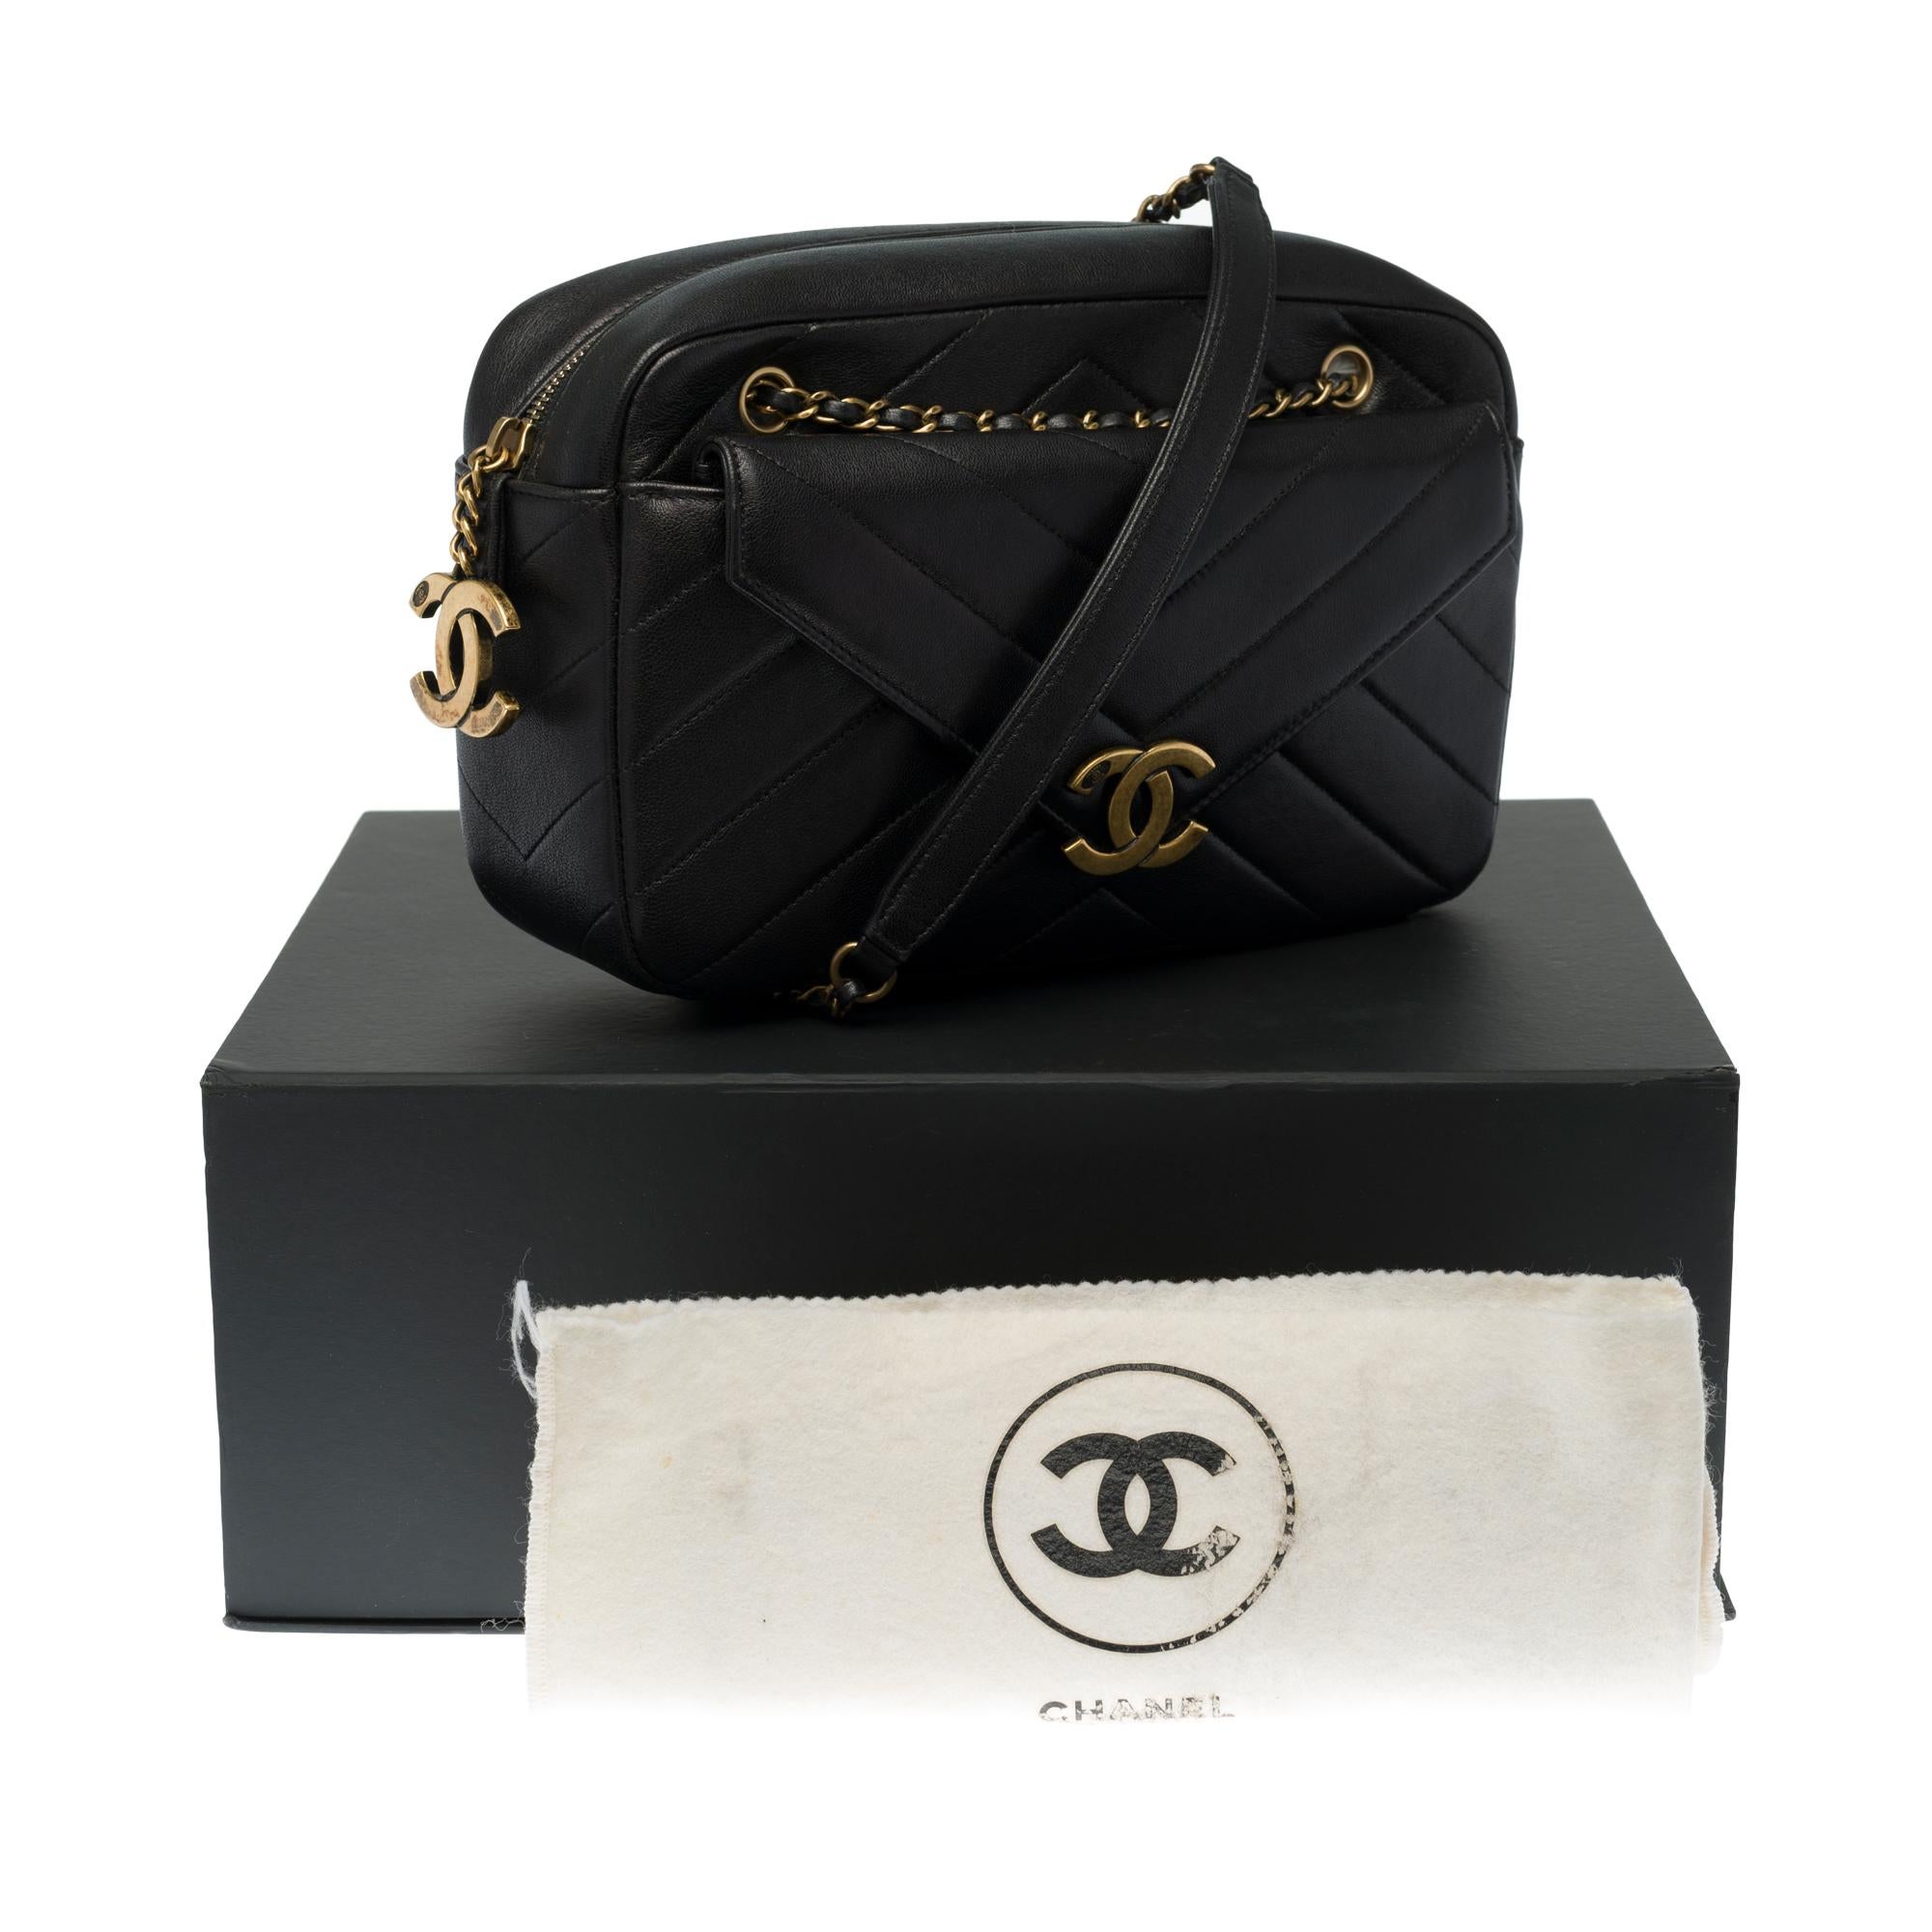 Amazing Chanel Camera shoulder bag in black herringbone leather, GHW 5